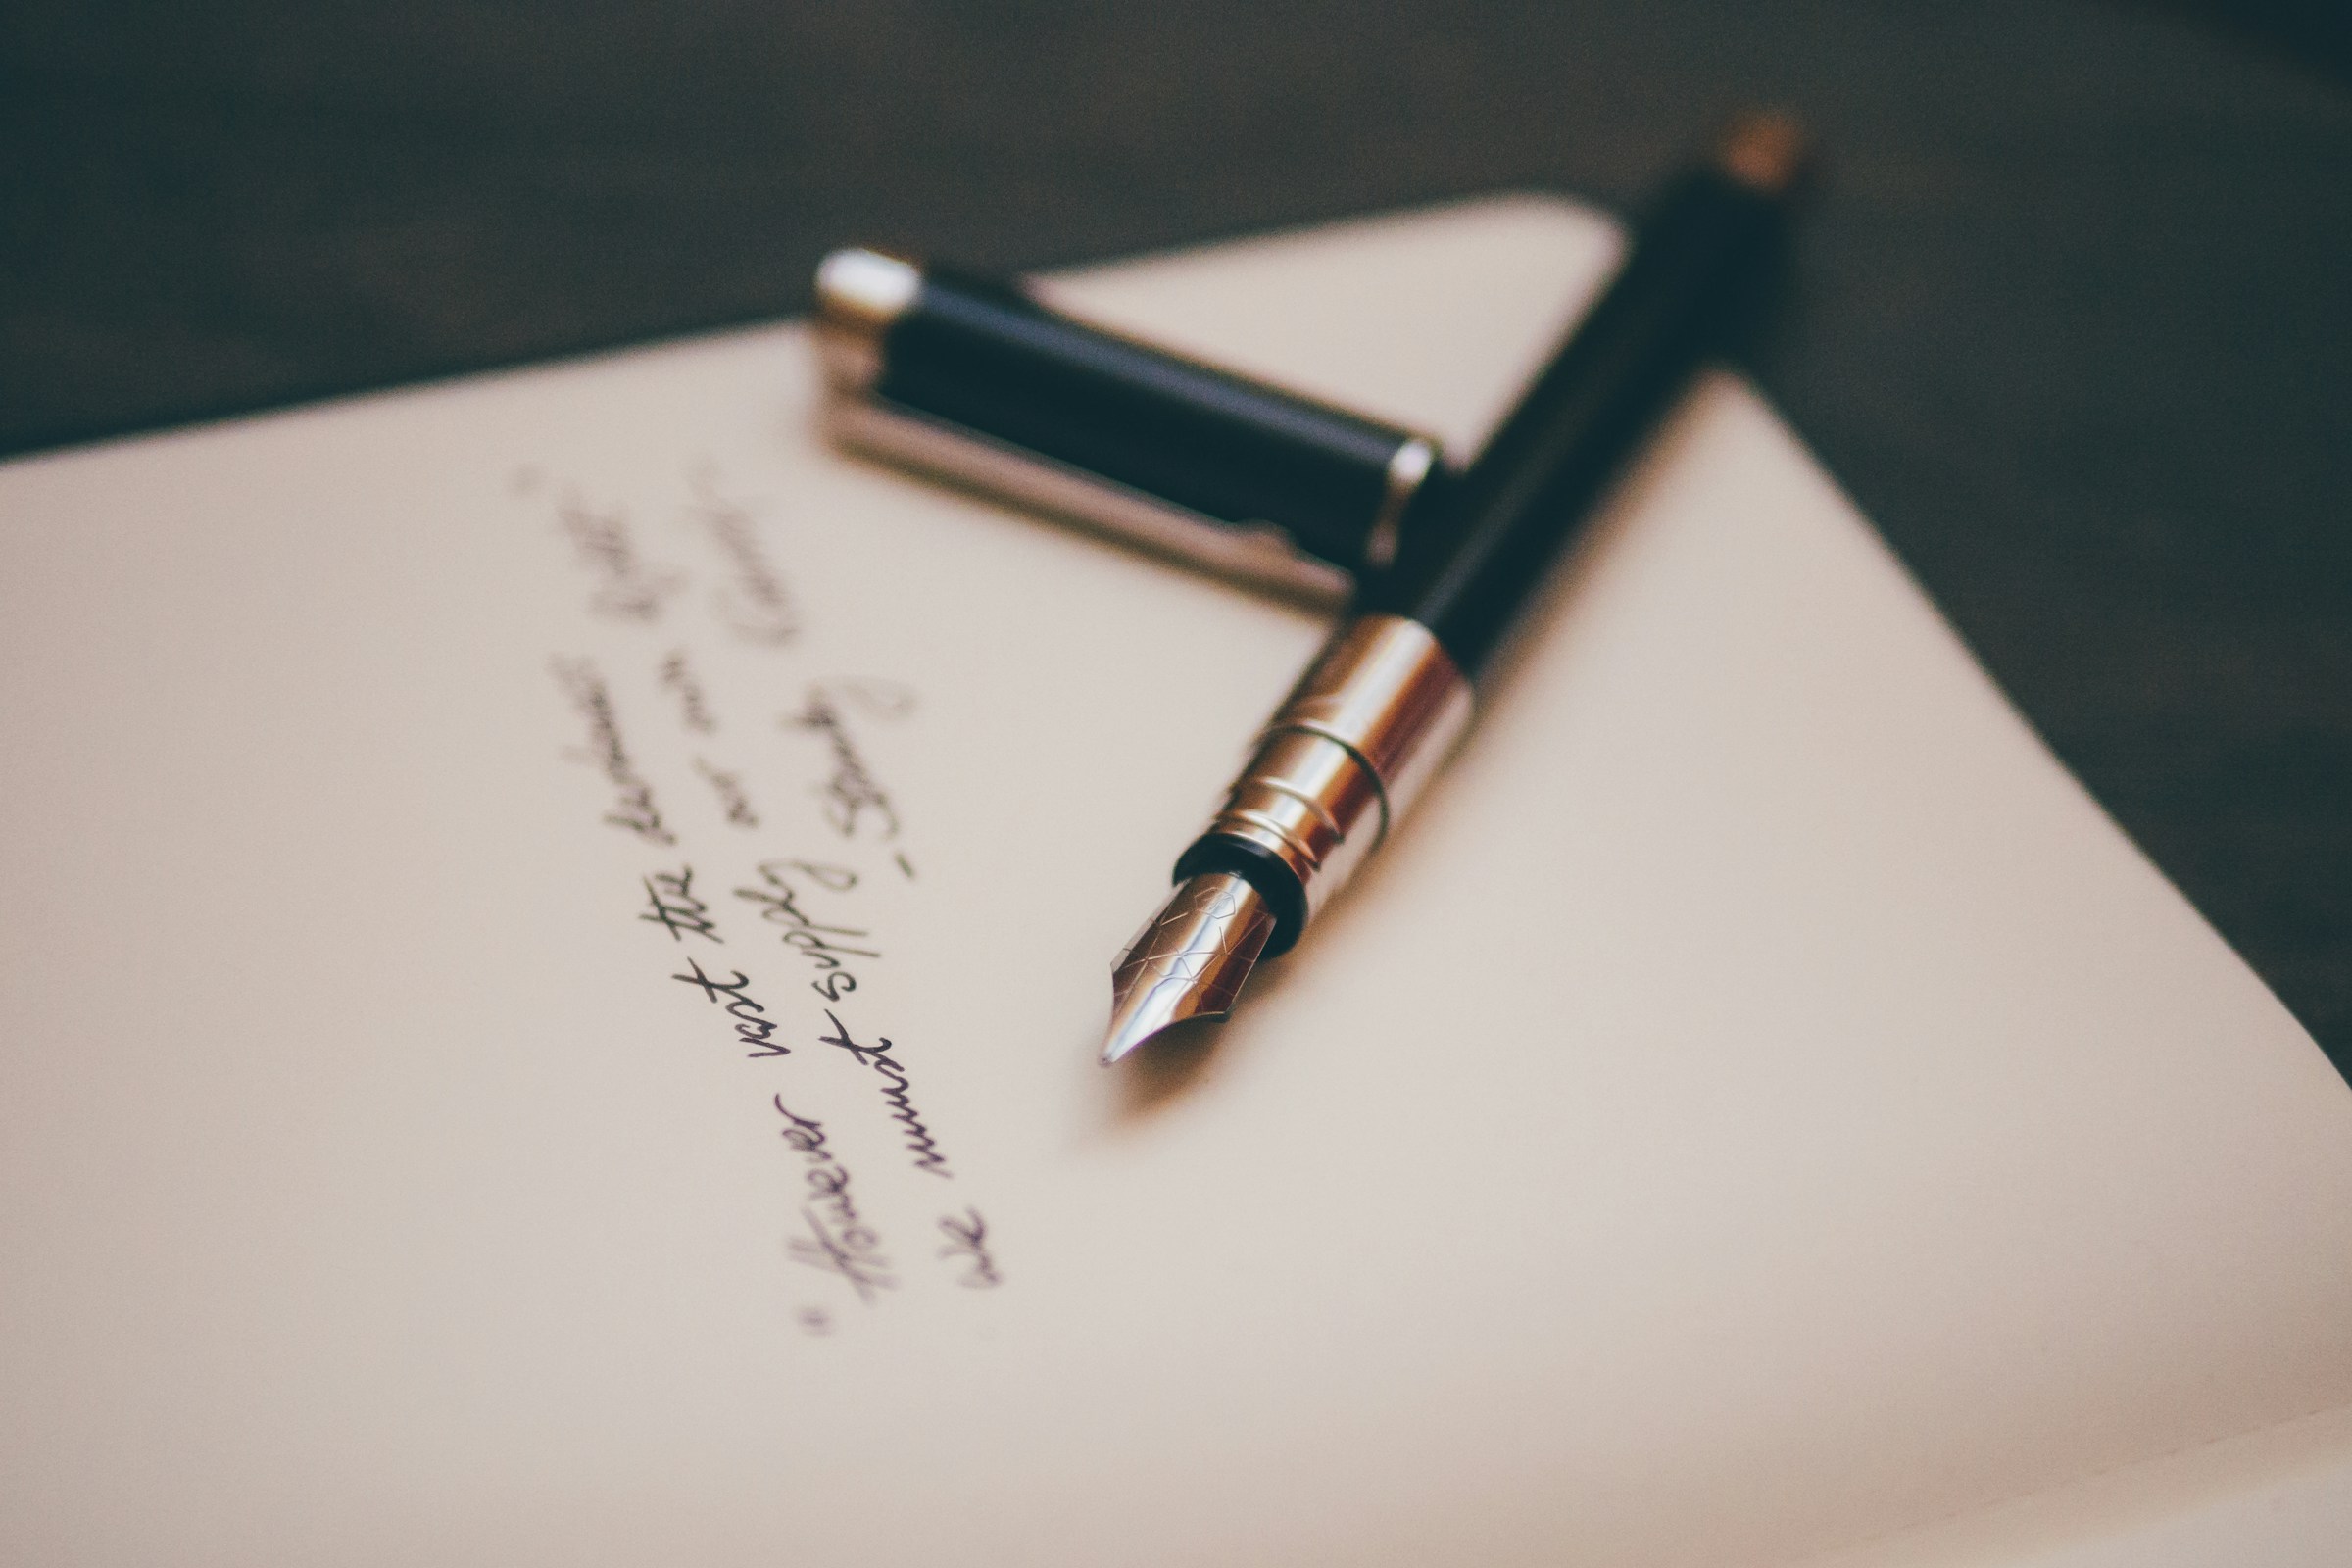 Handwritten letter with a fountain pen | Source: Unsplash